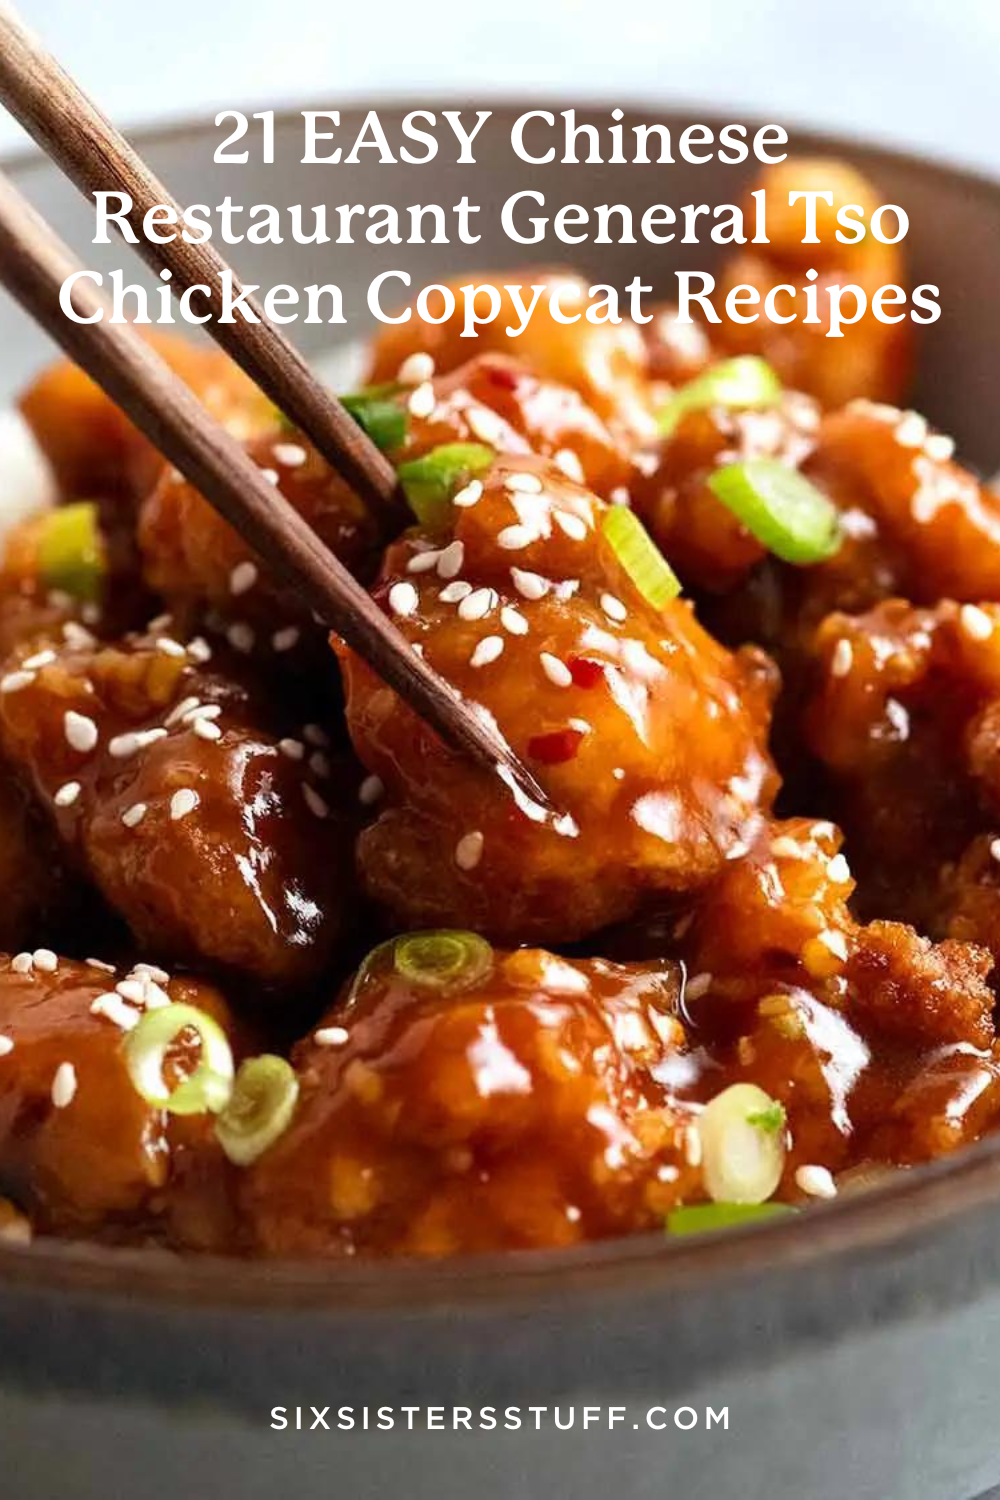 21 EASY Chinese Restaurant General Tso Chicken Copycat Recipes